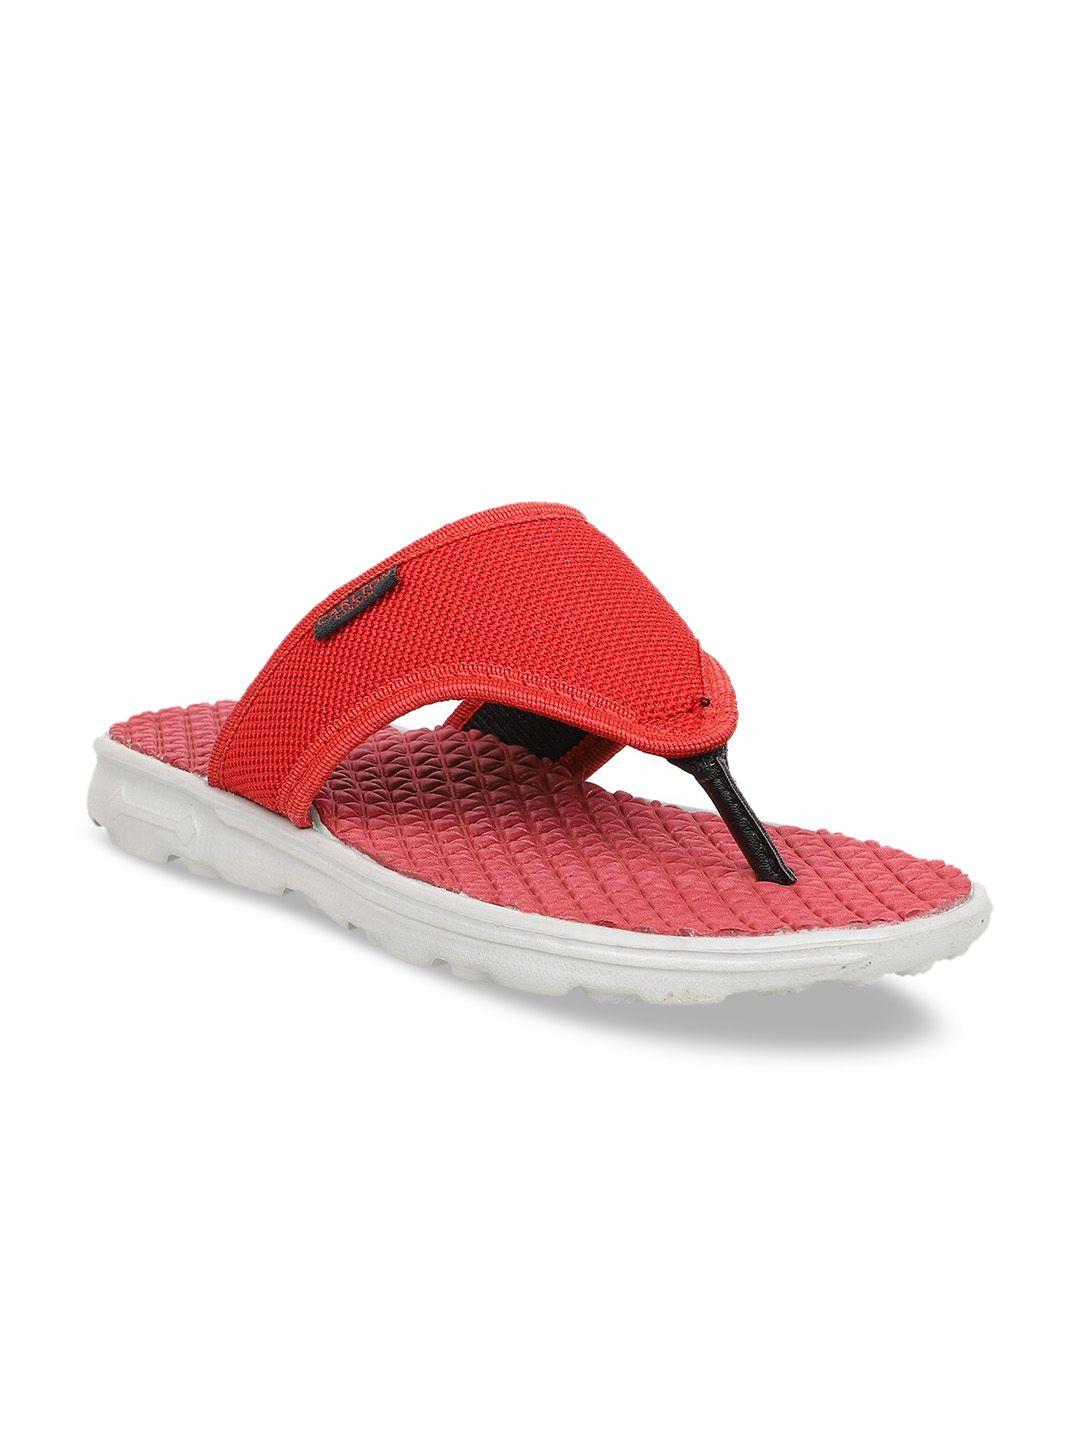 carlton london sports women red self design thong flip-flops